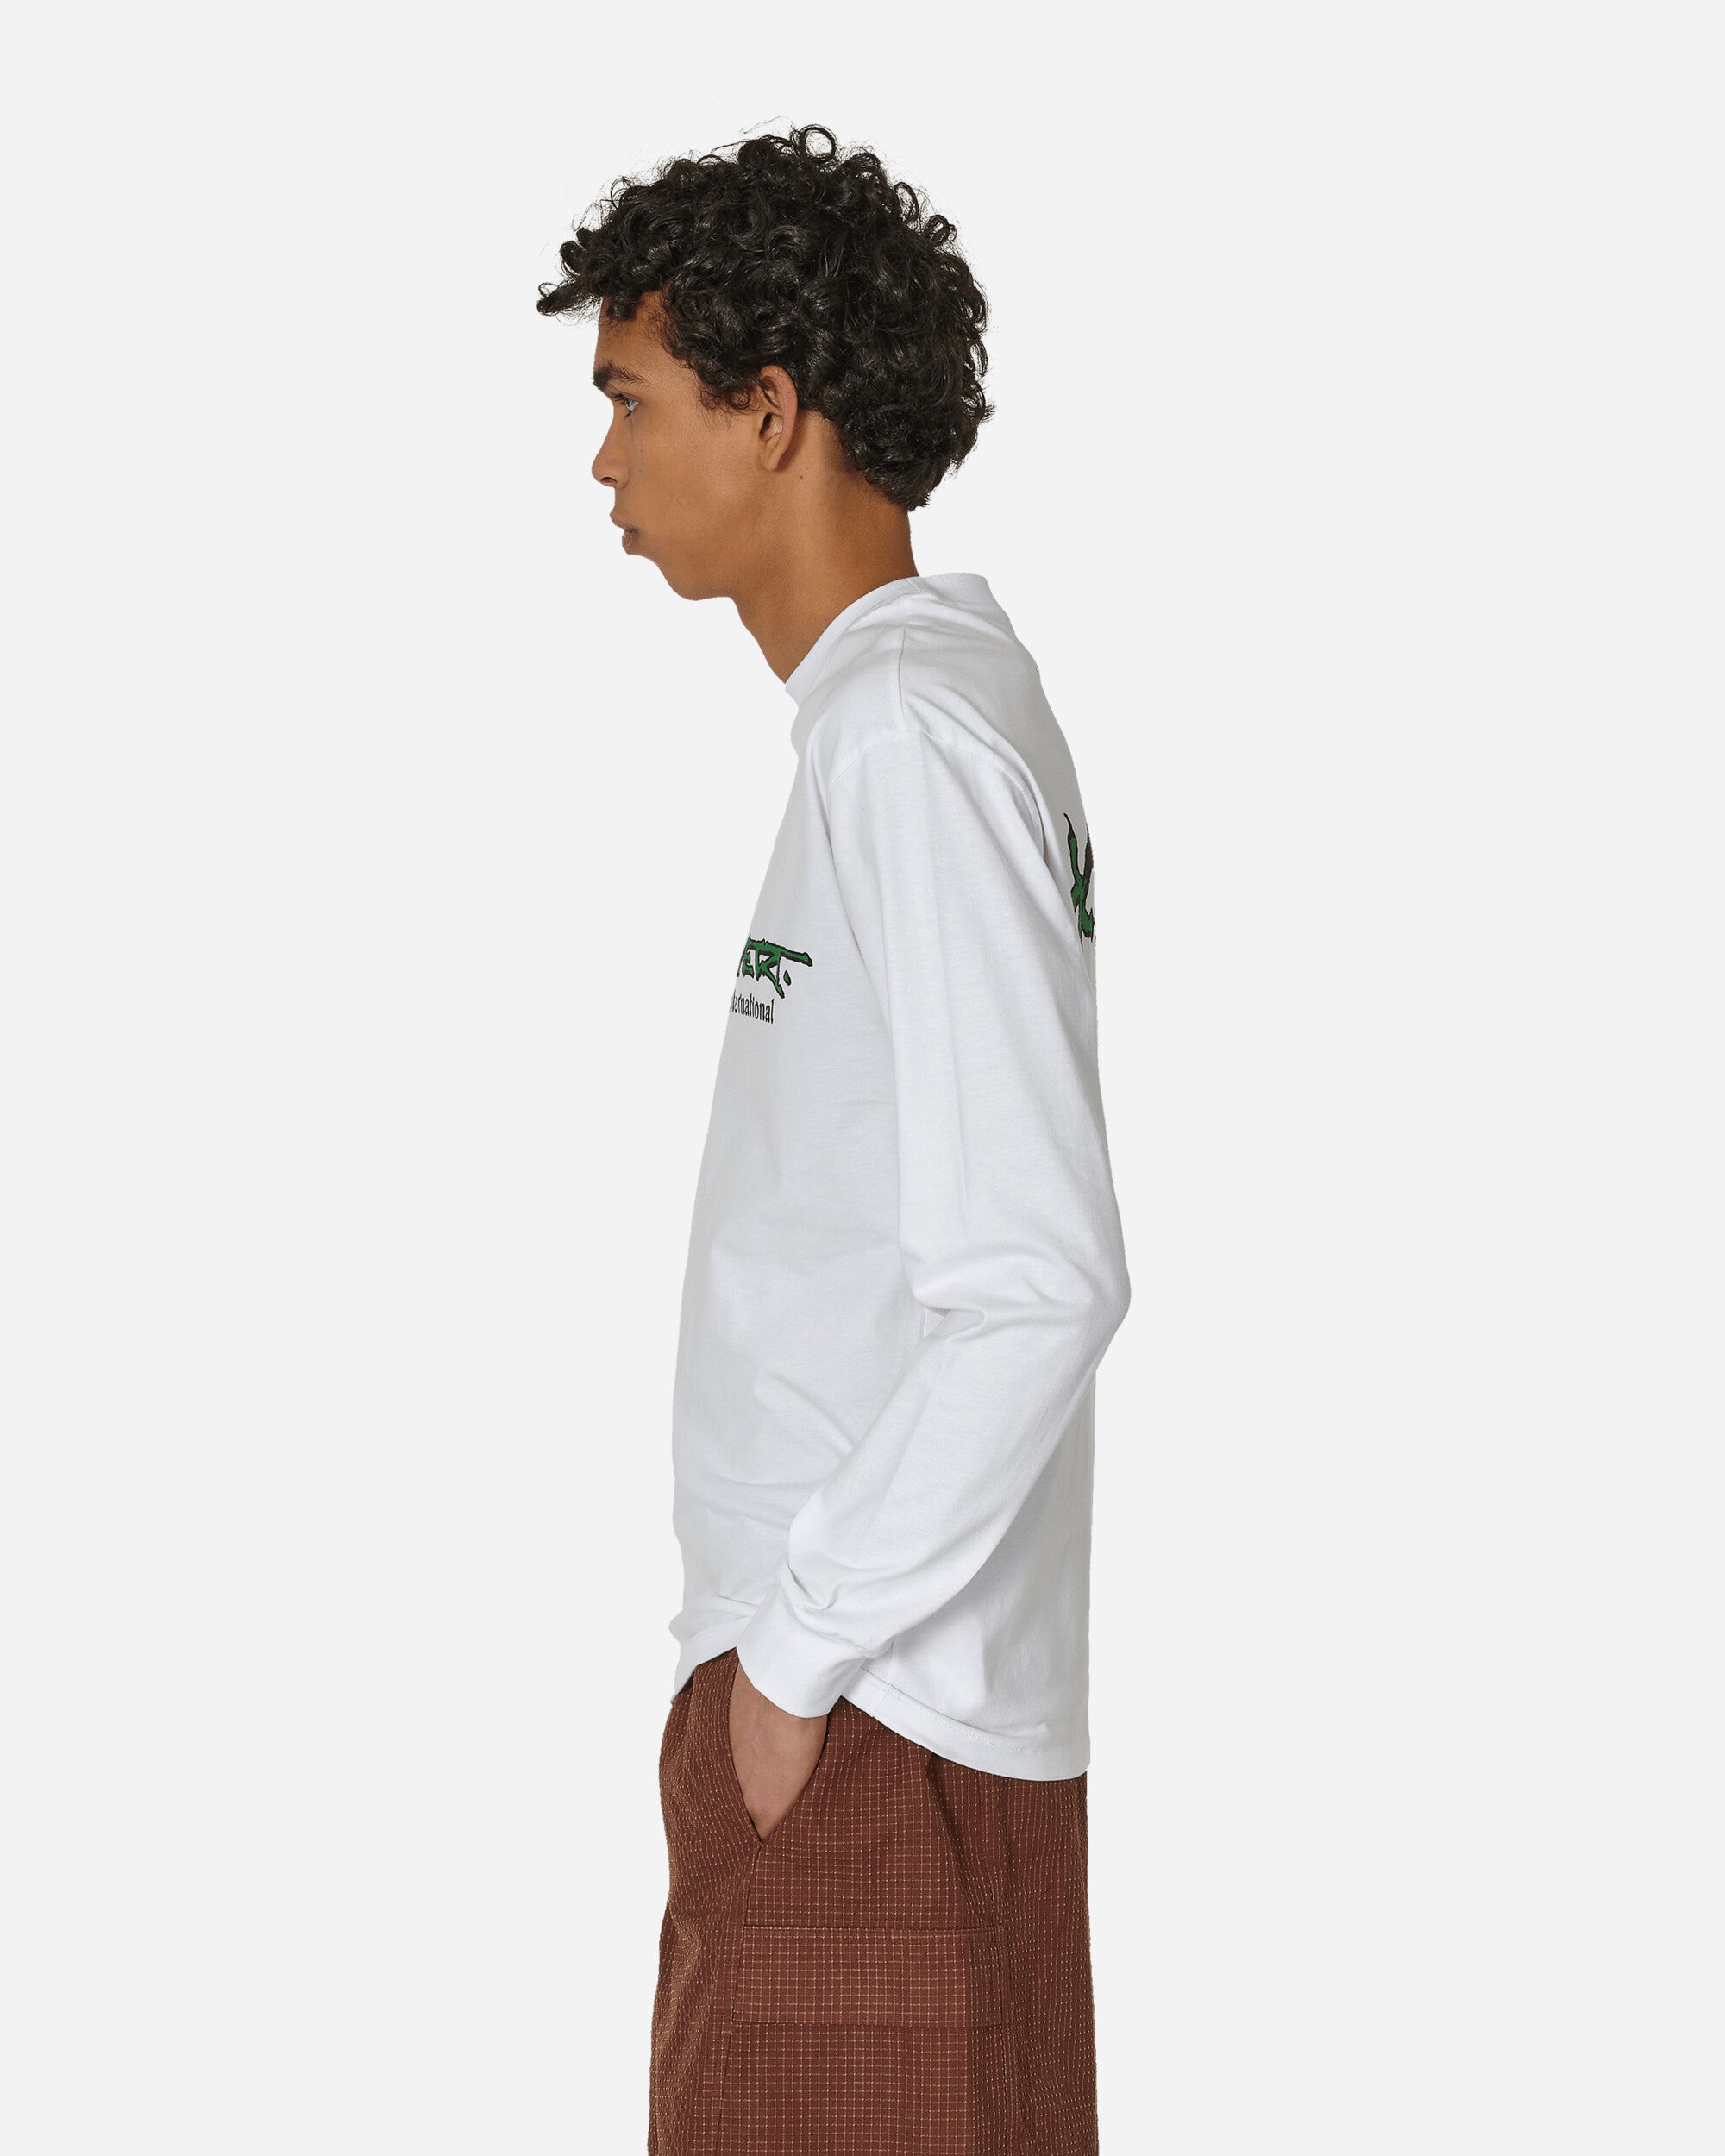 Rayon Vert Lucky Ls Shirt Ghost White T-Shirts Longsleeve RVS3-LS05 1